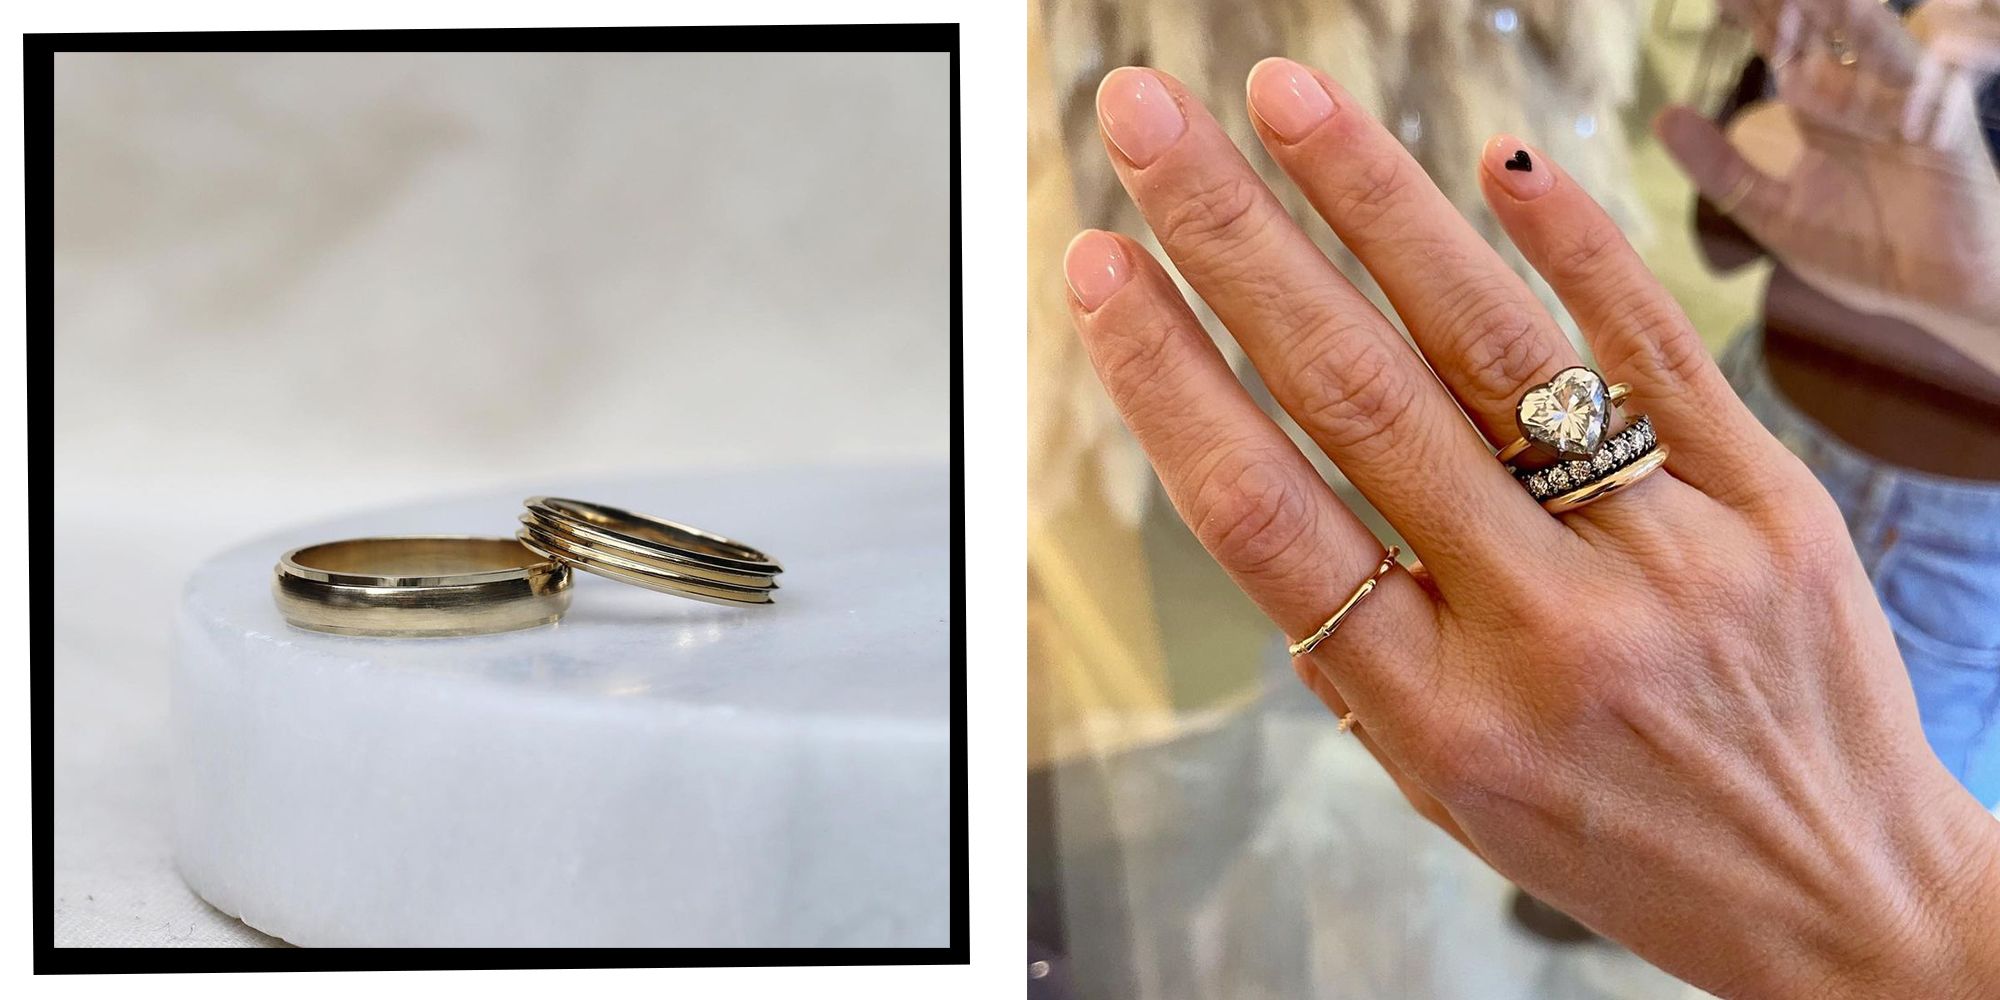 Popular Wedding Engagement Ring Styles | Types of wedding rings, Engagement  ring styles, Engagement ring types